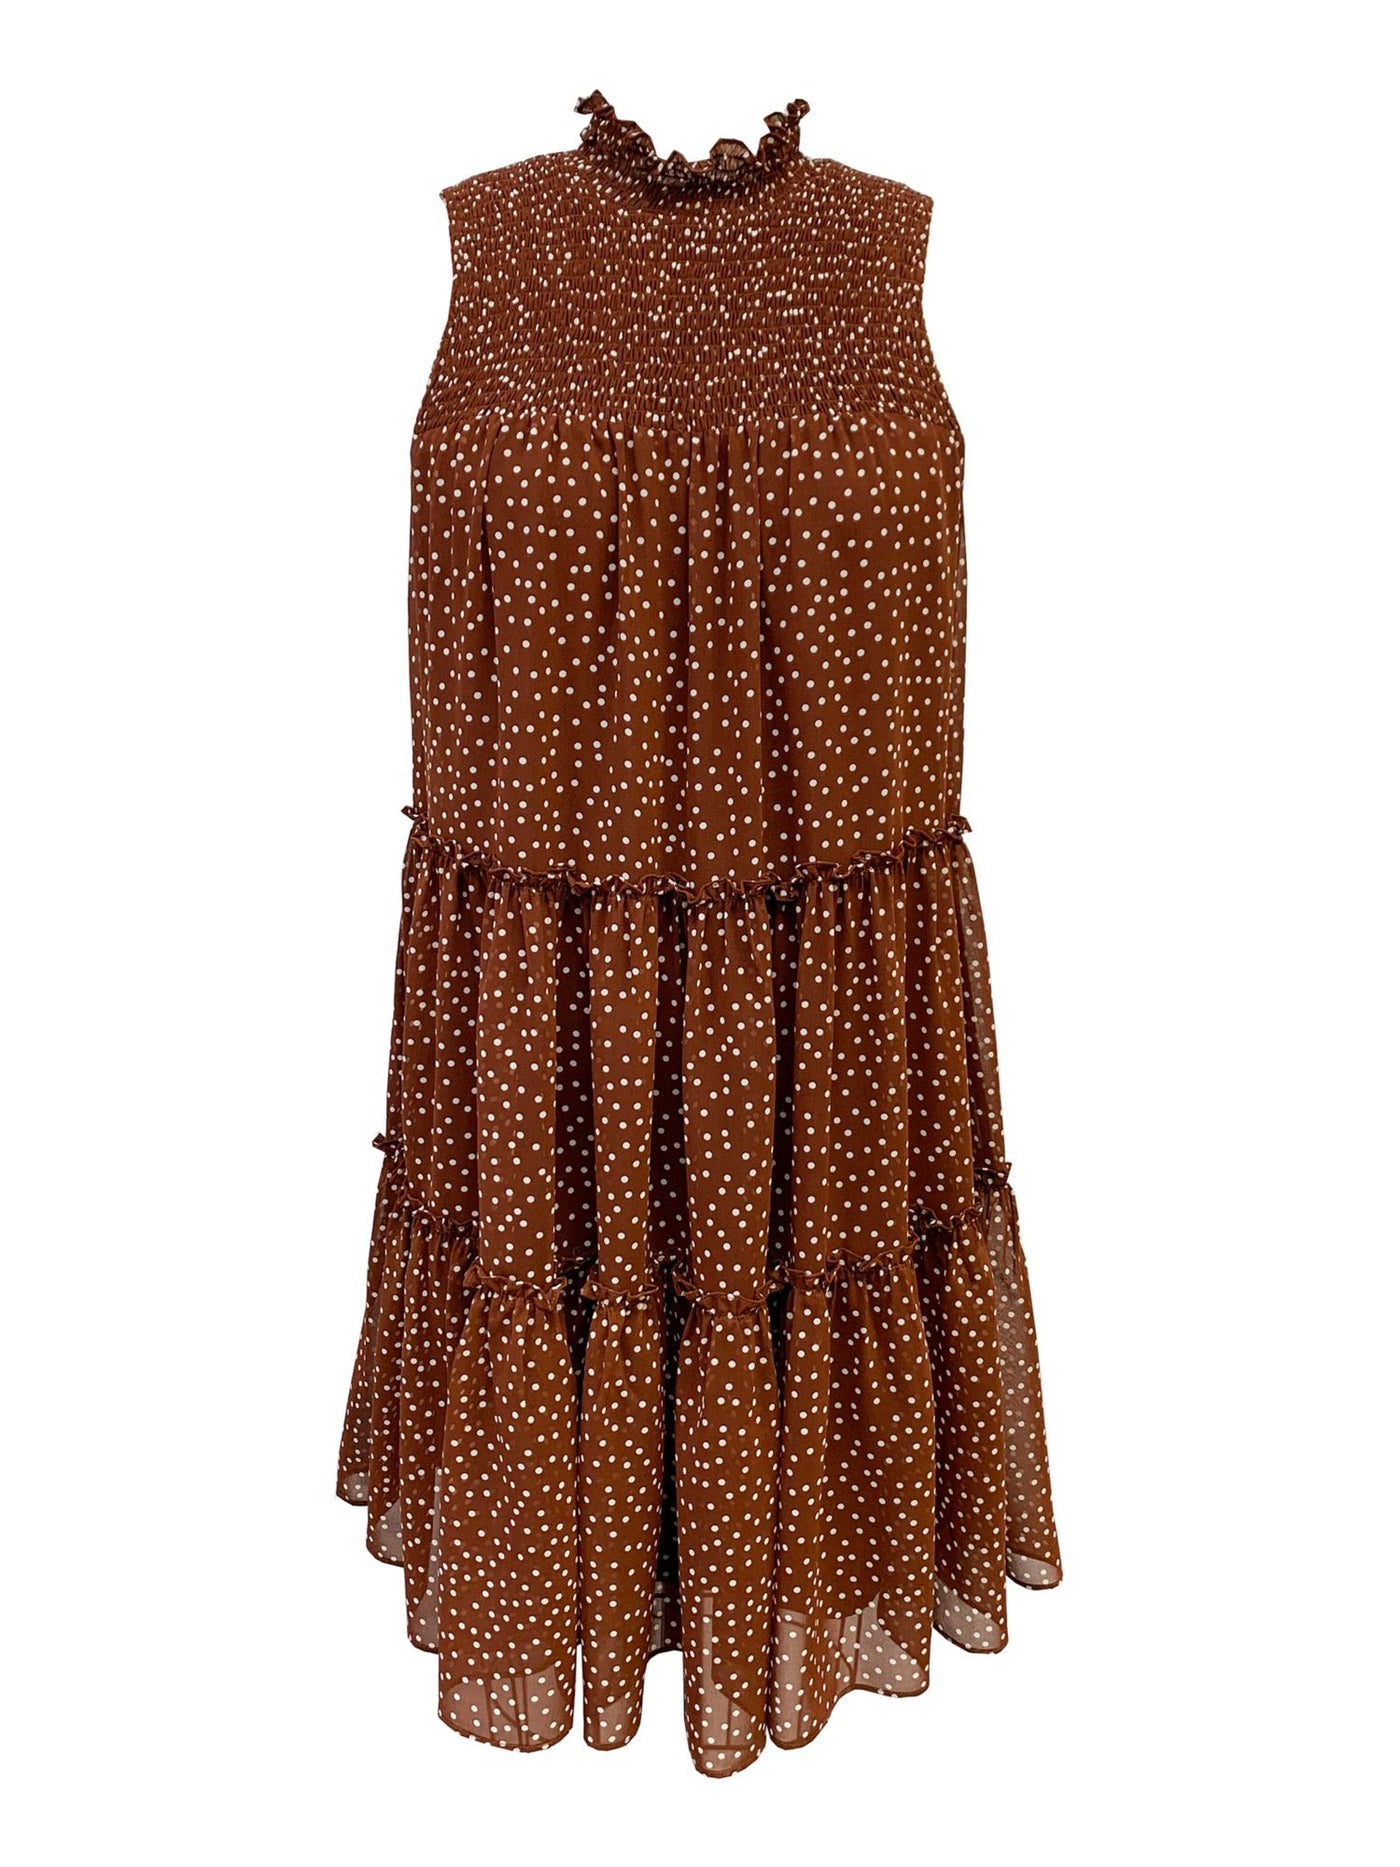 TAYLOR Womens Brown Smocked Sheer Lined Tiered Polka Dot Sleeveless Mock Neck Mini Shift Dress Petites 4P